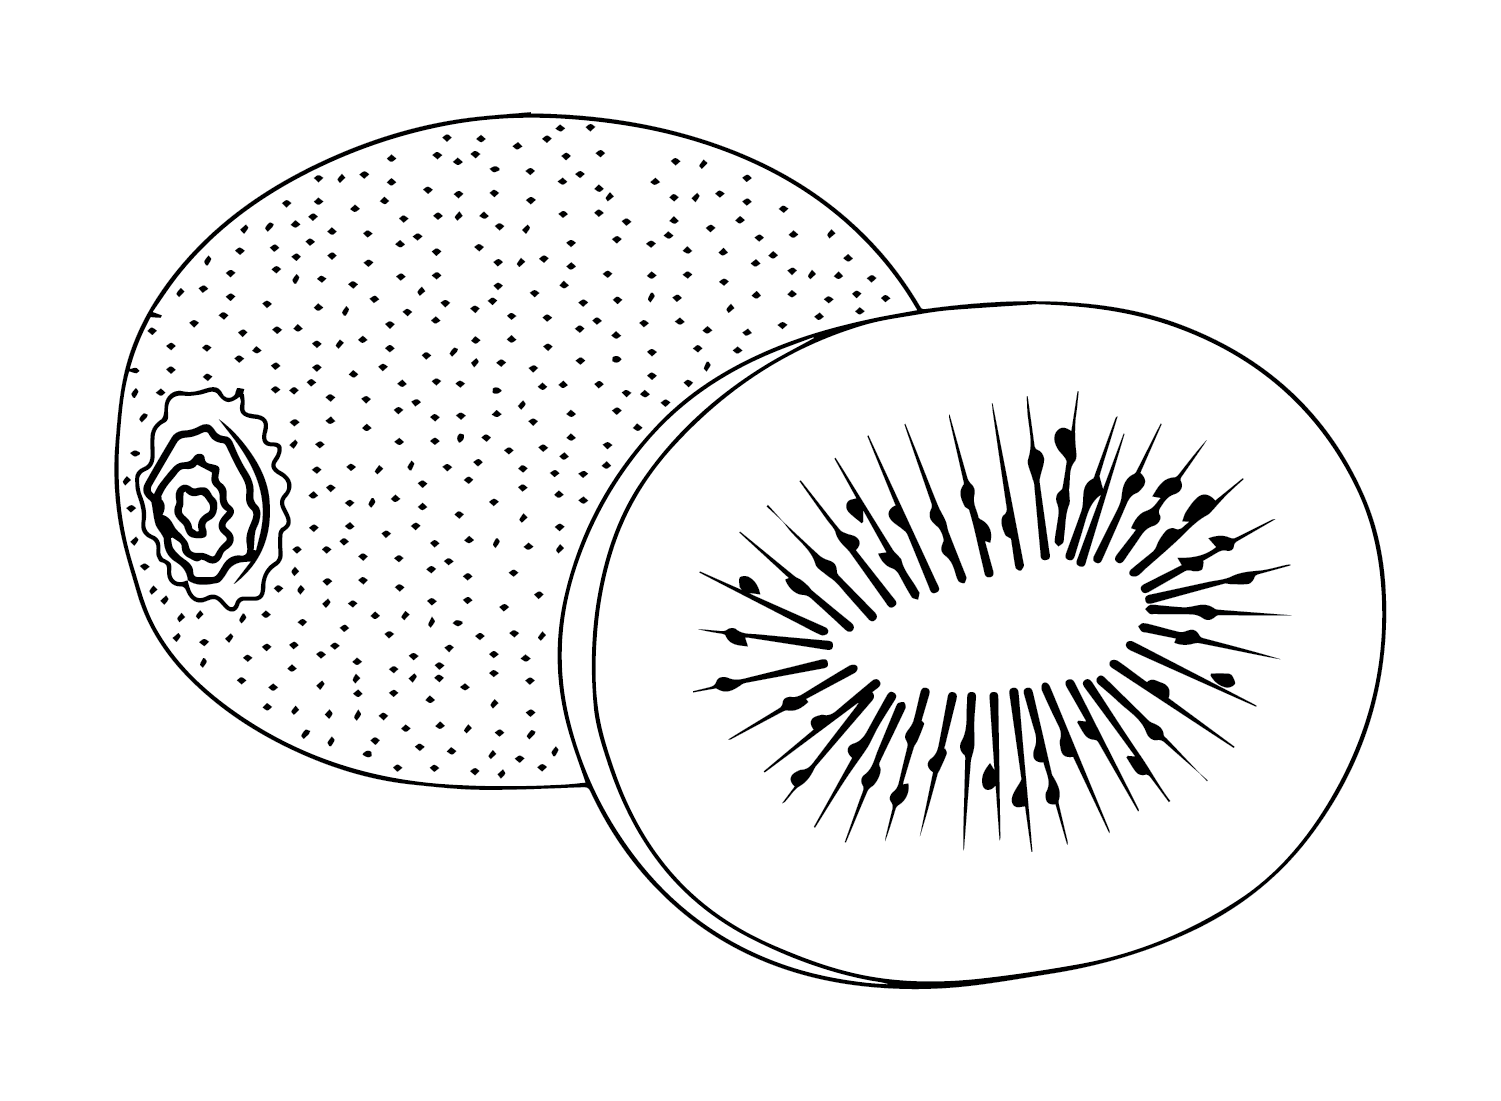 Kiwi Fruit Kleur van Kiwi Fruit